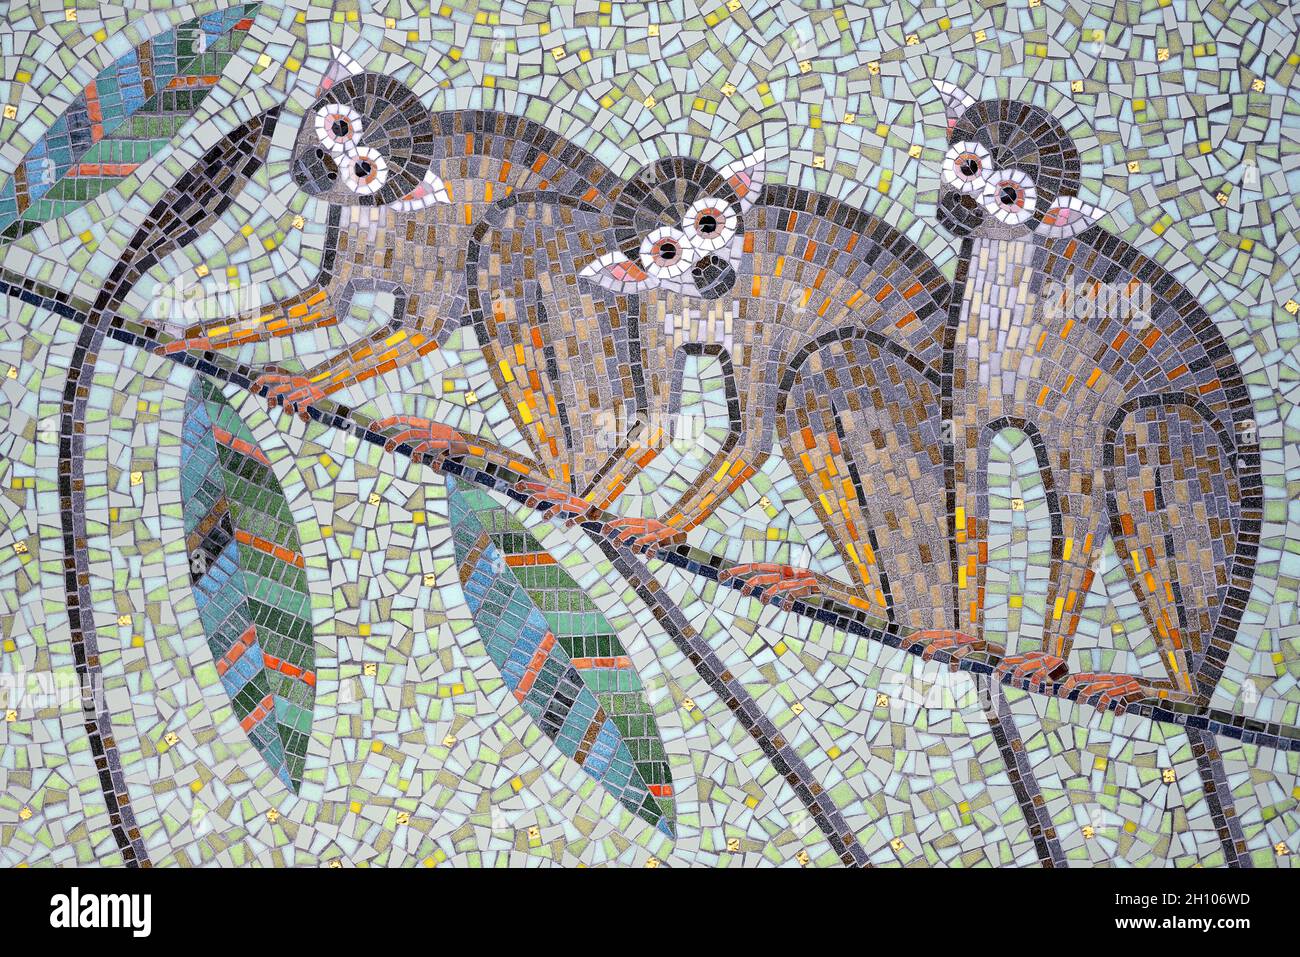 London, England, UK. London Zoo, Regent's Park. Mosaic of Squirrel Monkeys (Tessa Hunkin) by the main entrance. Stock Photo